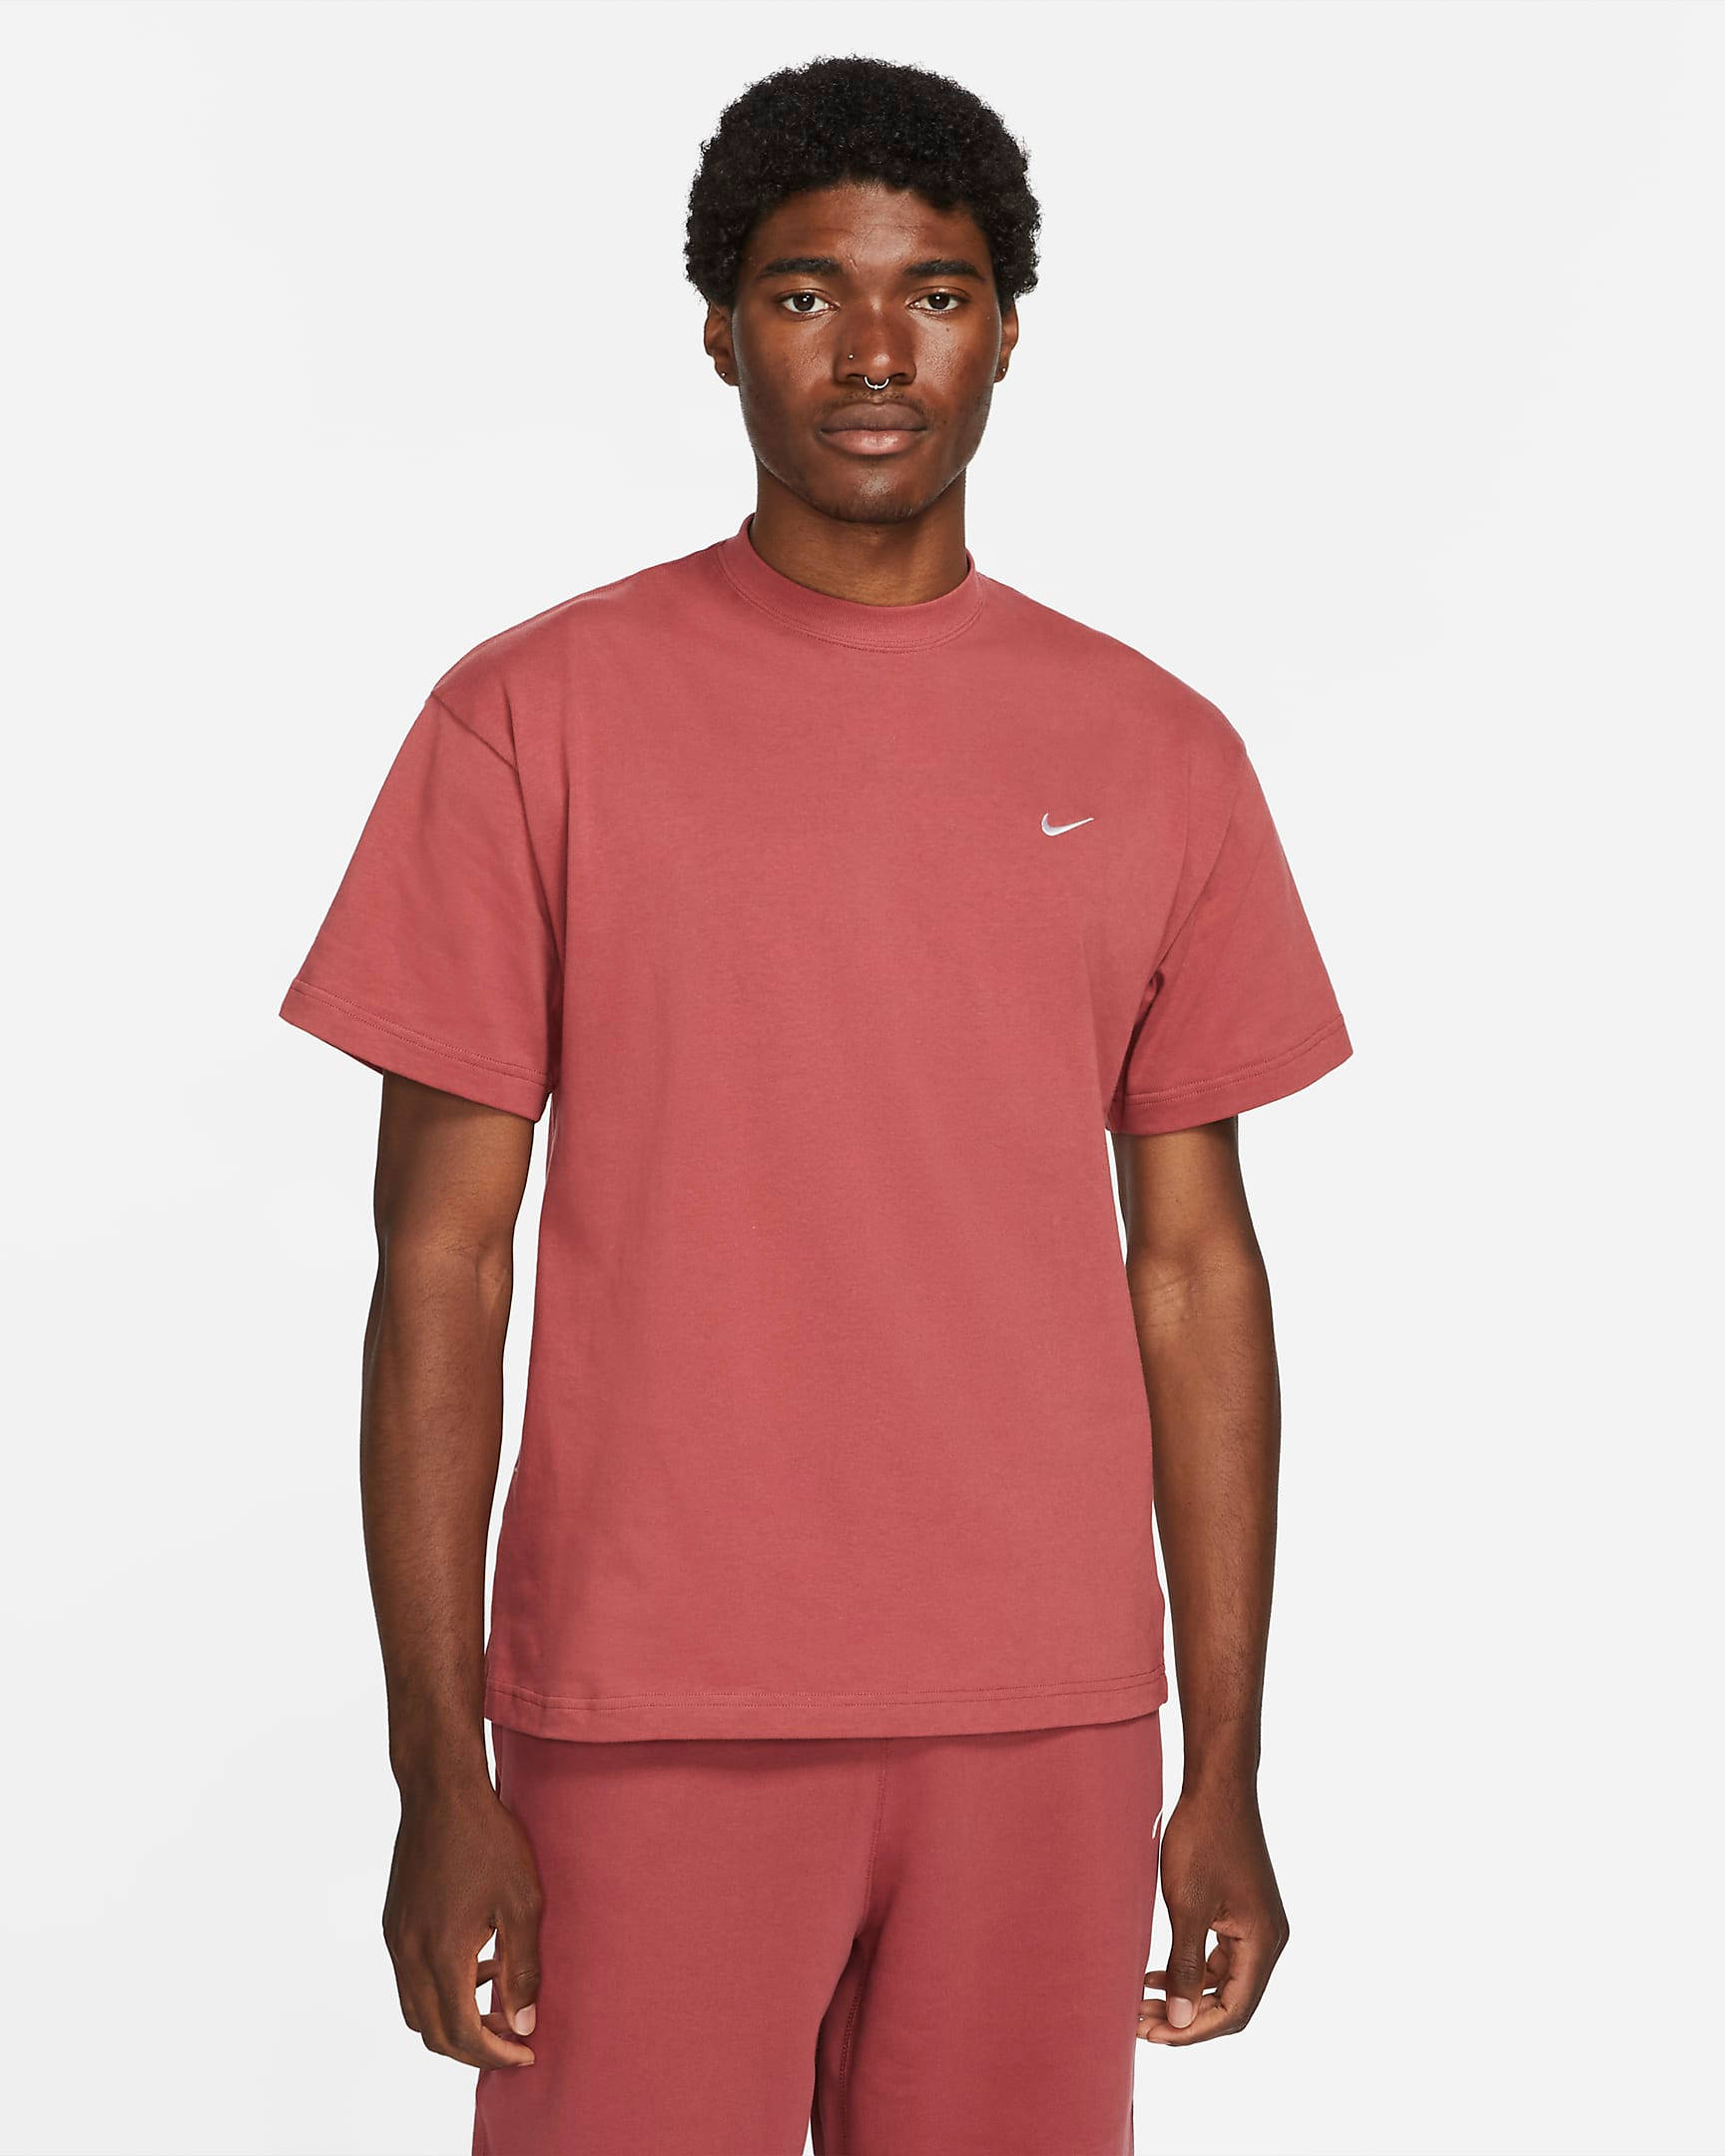 Nike Solo Swoosh Men's T-Shirt Marron CV0559-318